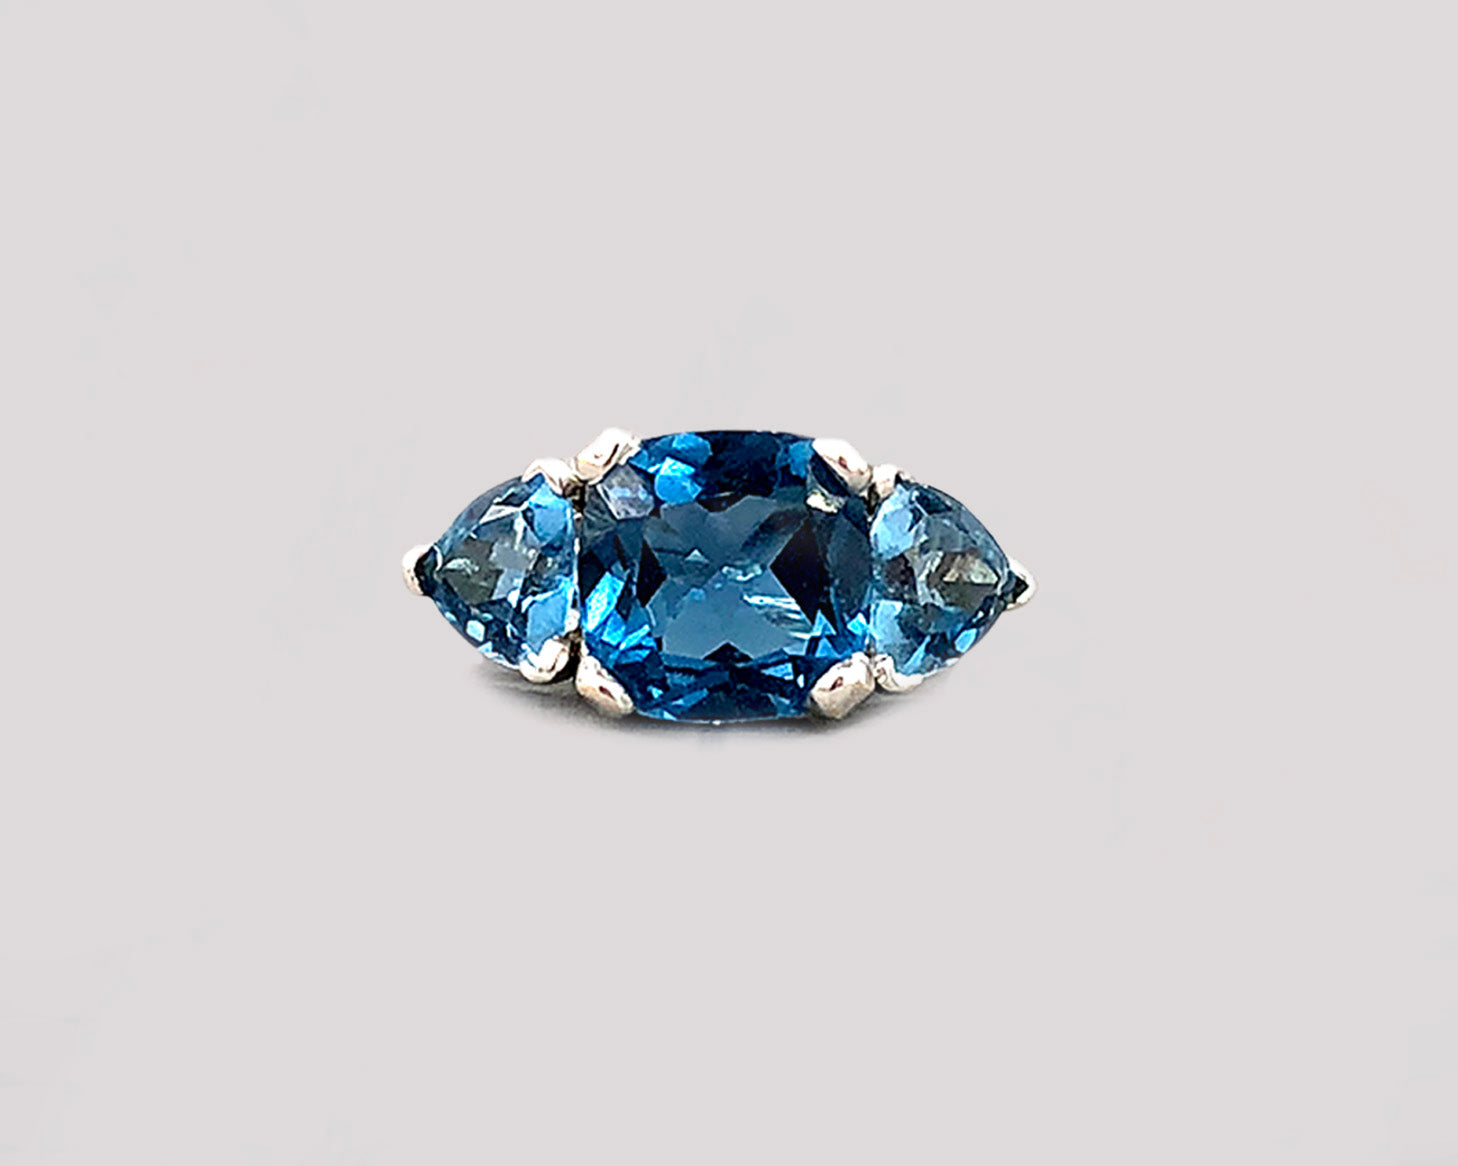 Blue Topaz Statement Ring in Sterling Silver - Zoran Designs